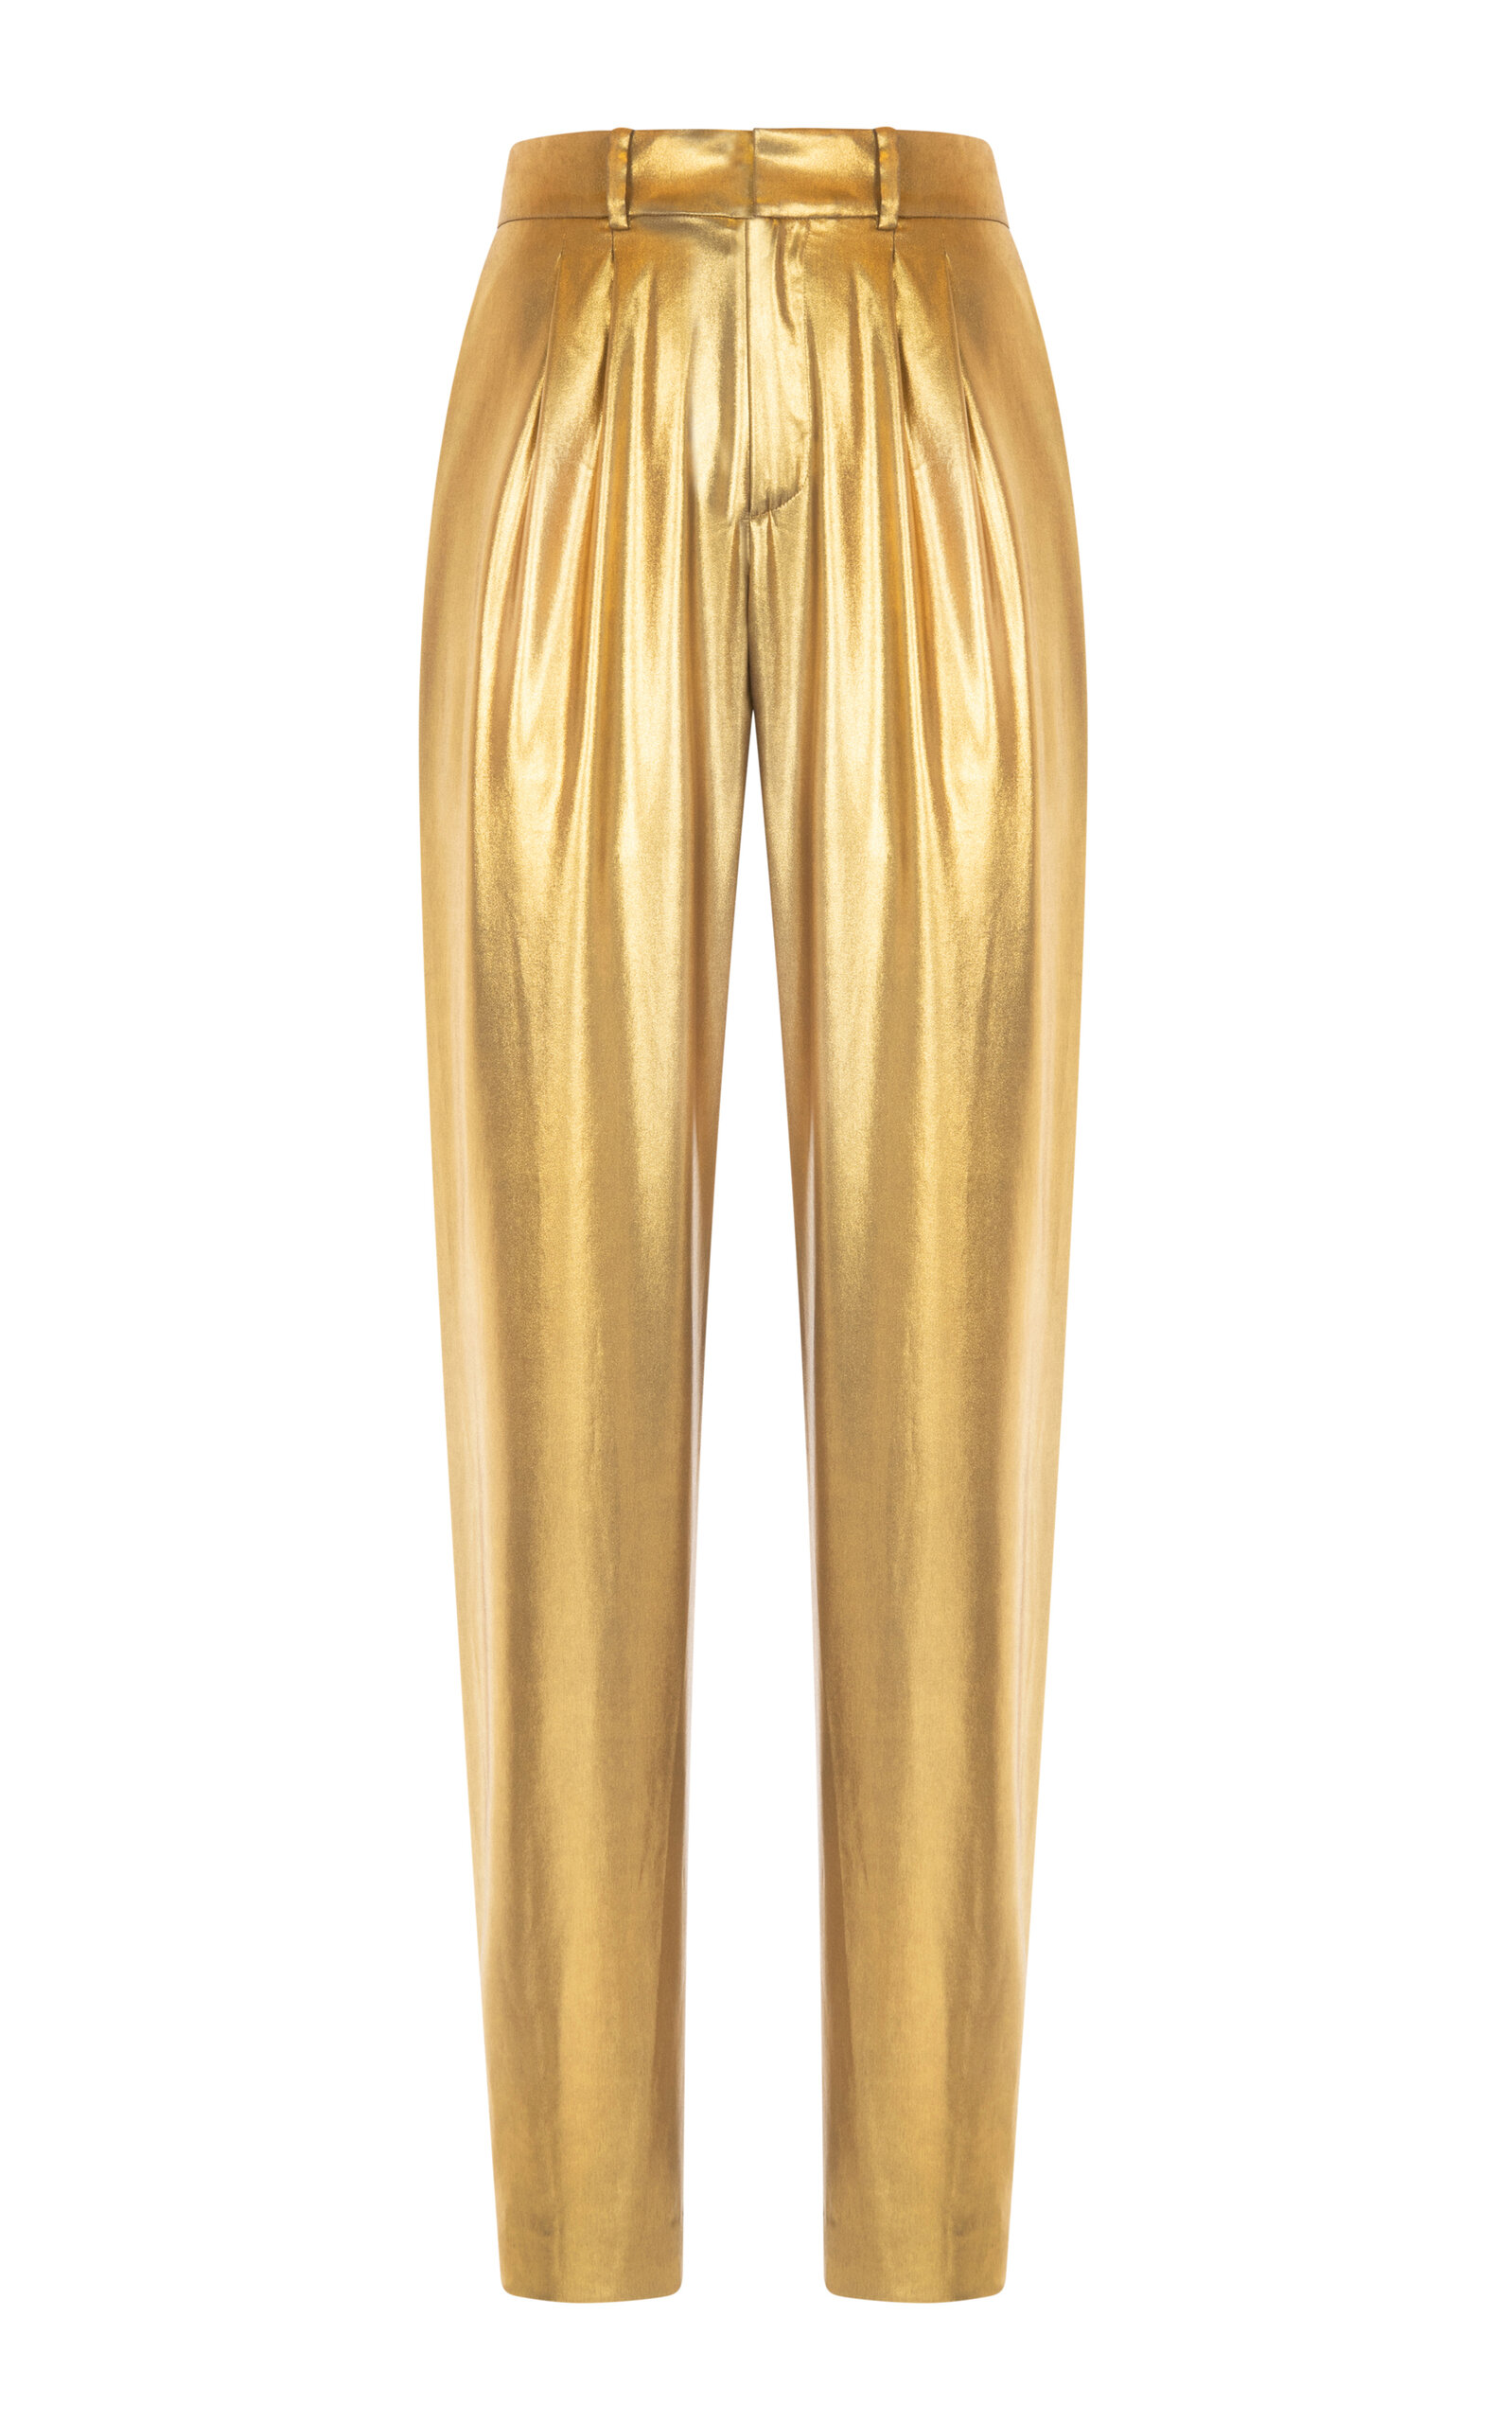 Ralph Lauren - Avrill Tapered Metallic Pants - Gold - US 6 - Moda Operandi